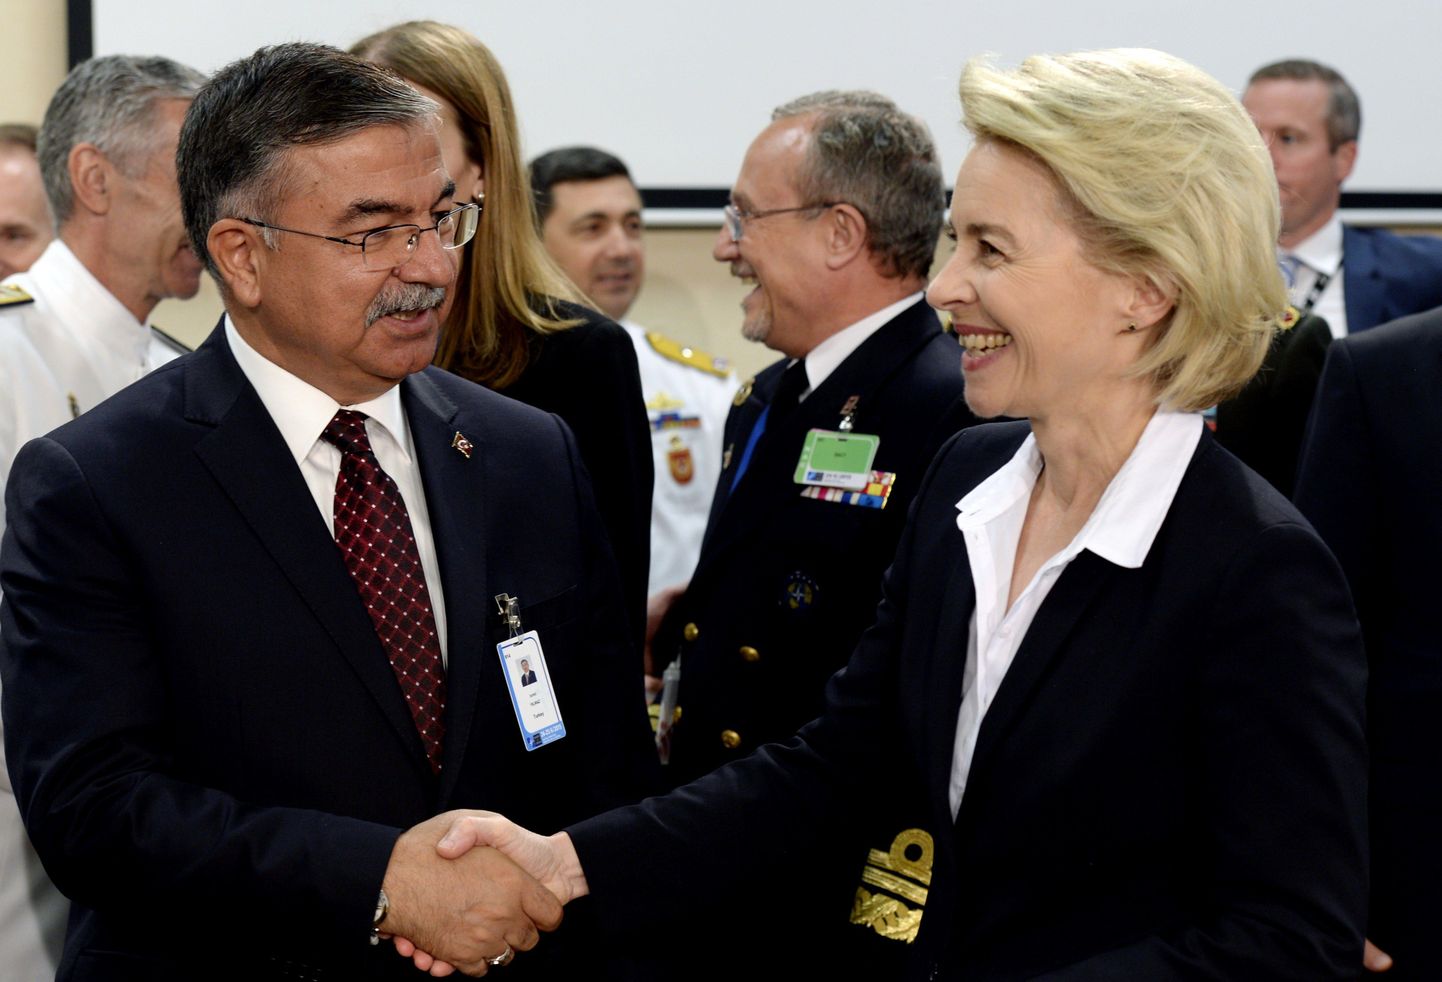 Türgi kaitseminister Ismet Yilmaz kohtumisel Saksa kaitseminister Ursula von der Leyeniga.